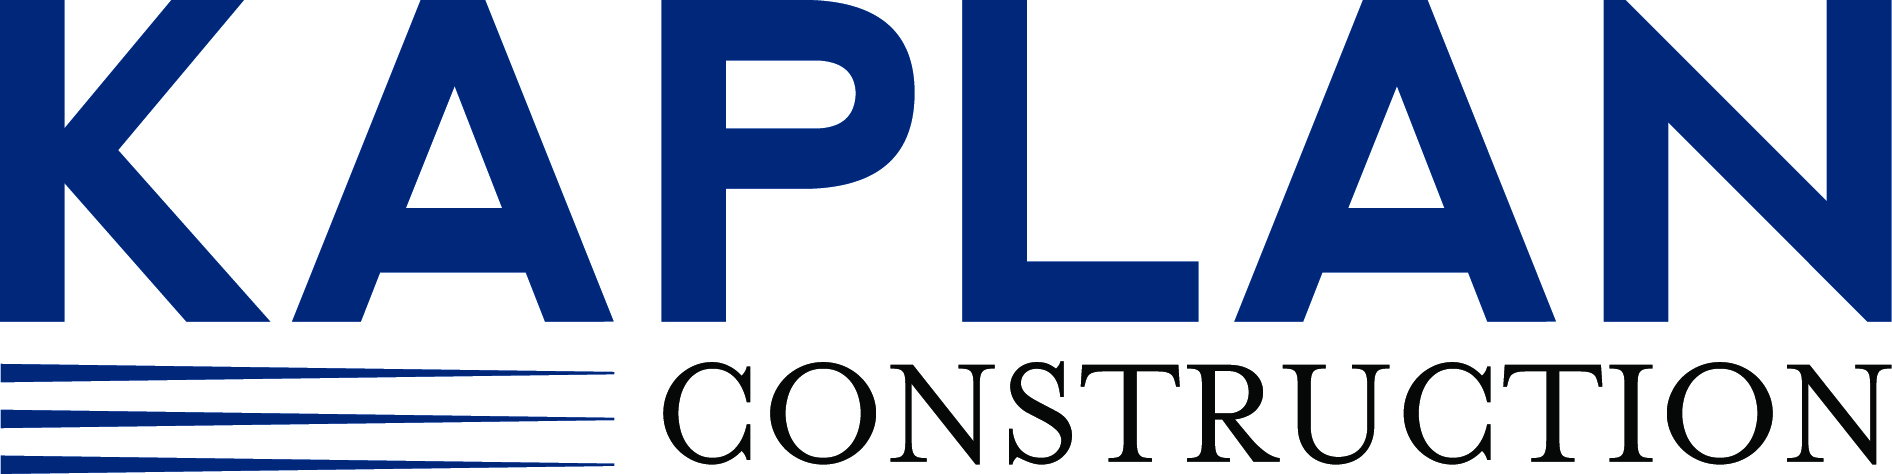 Kaplan Construction company logo